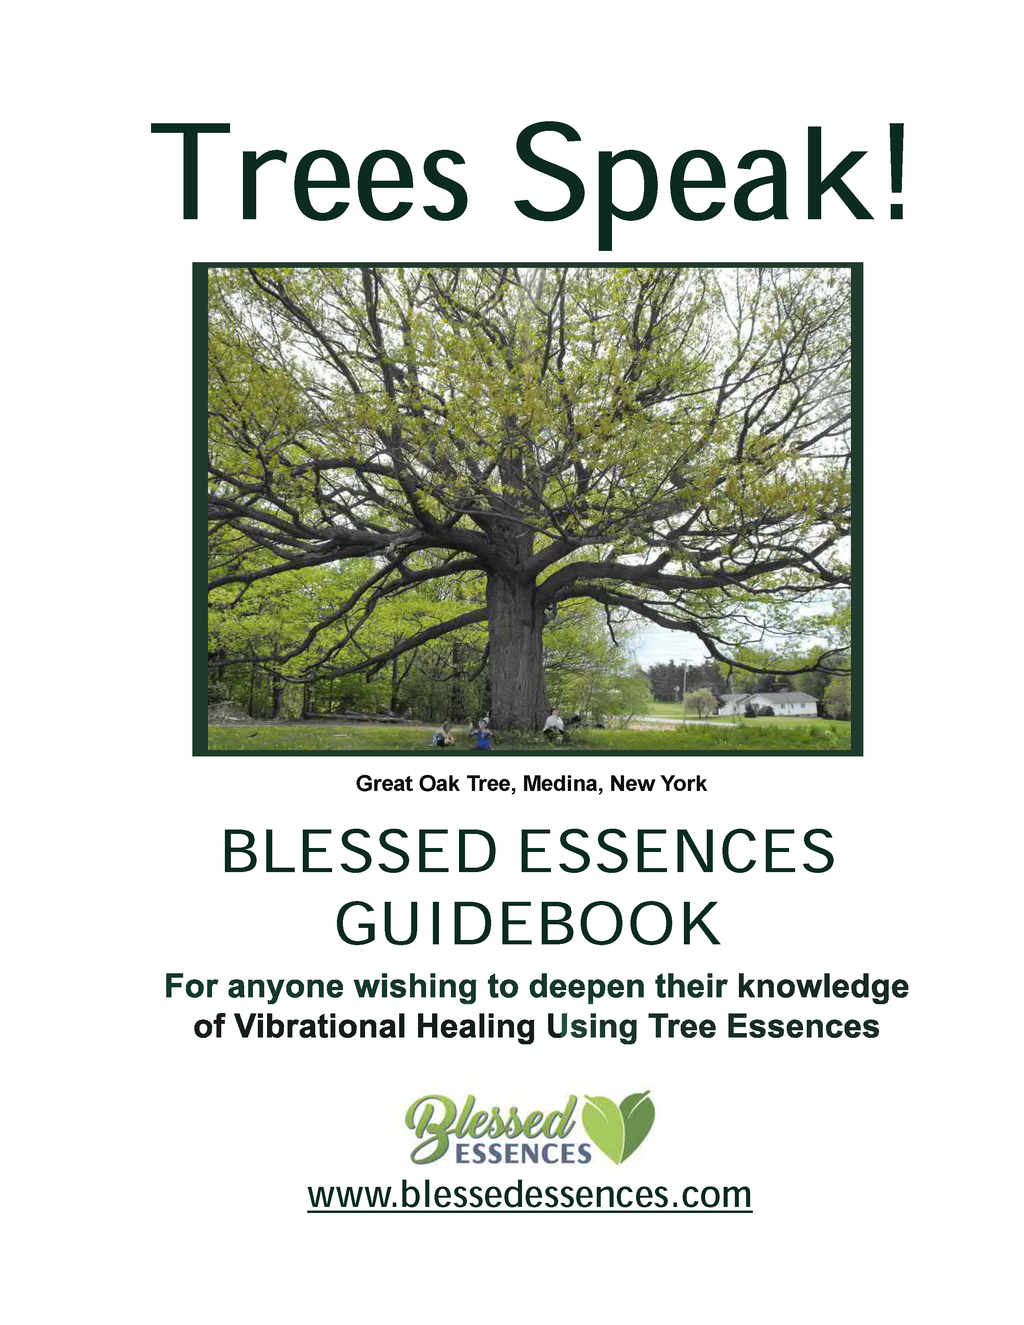 Trees Speak! Blessed Essences Guidebook